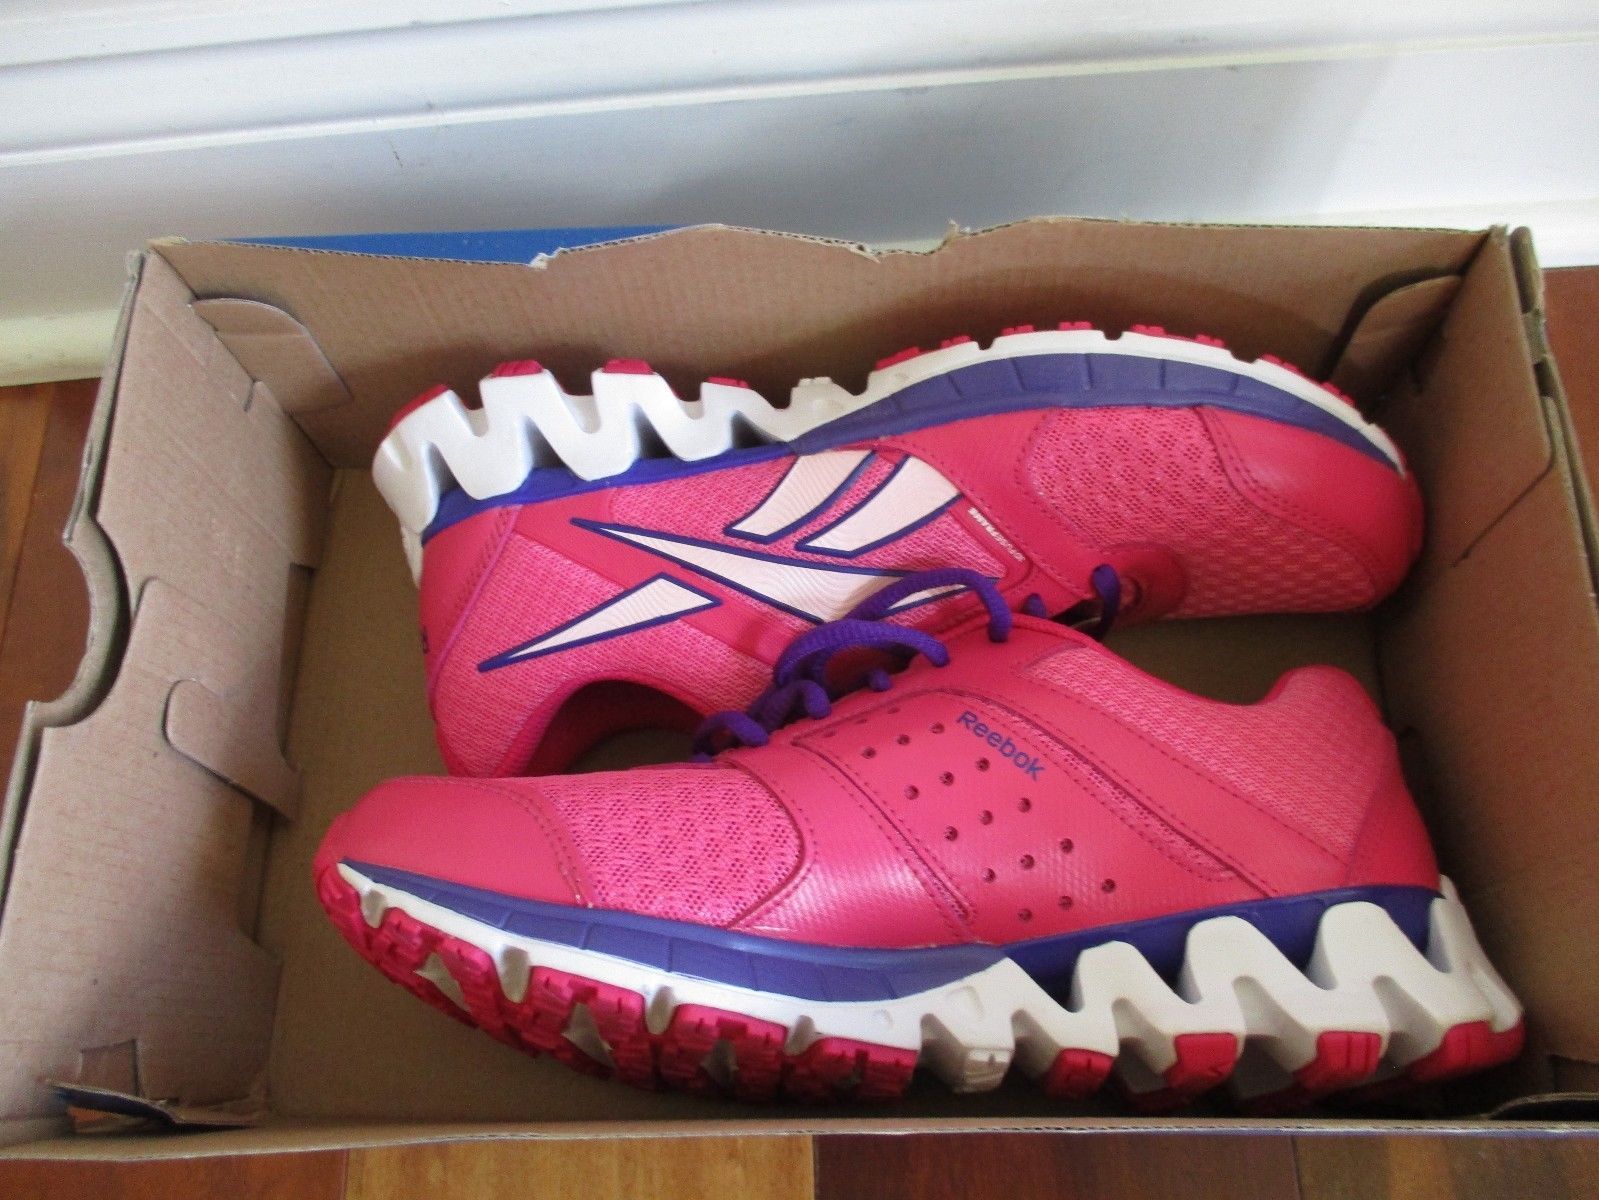 Primary image for BNIB Reebok ZigKick Alpha Running Shoe, big girl/junior, size 5, Pink/violet/wht